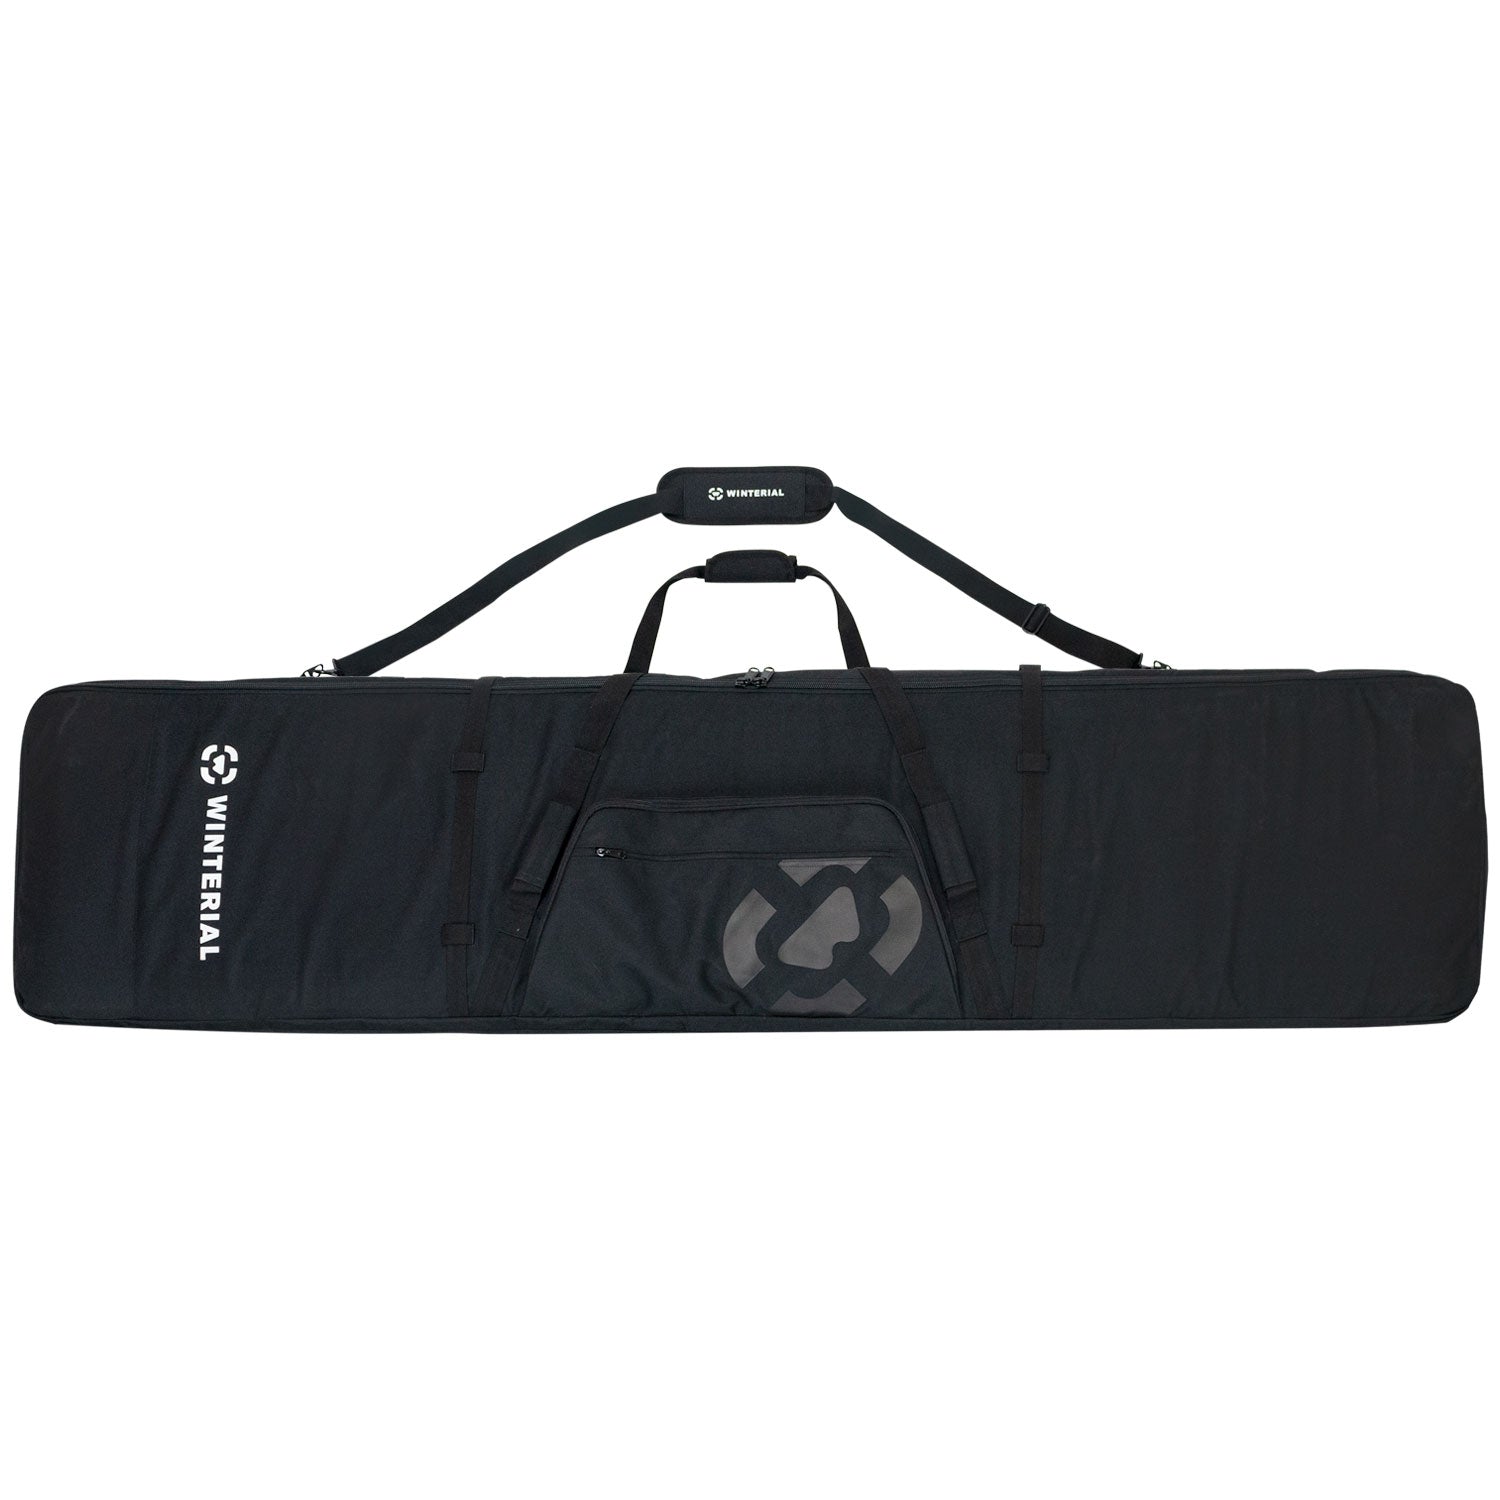 Double Ski Storage Bag I Wheeled Ski Travel Bag With 5 Storage Compartments  I Reinforced Double Padding